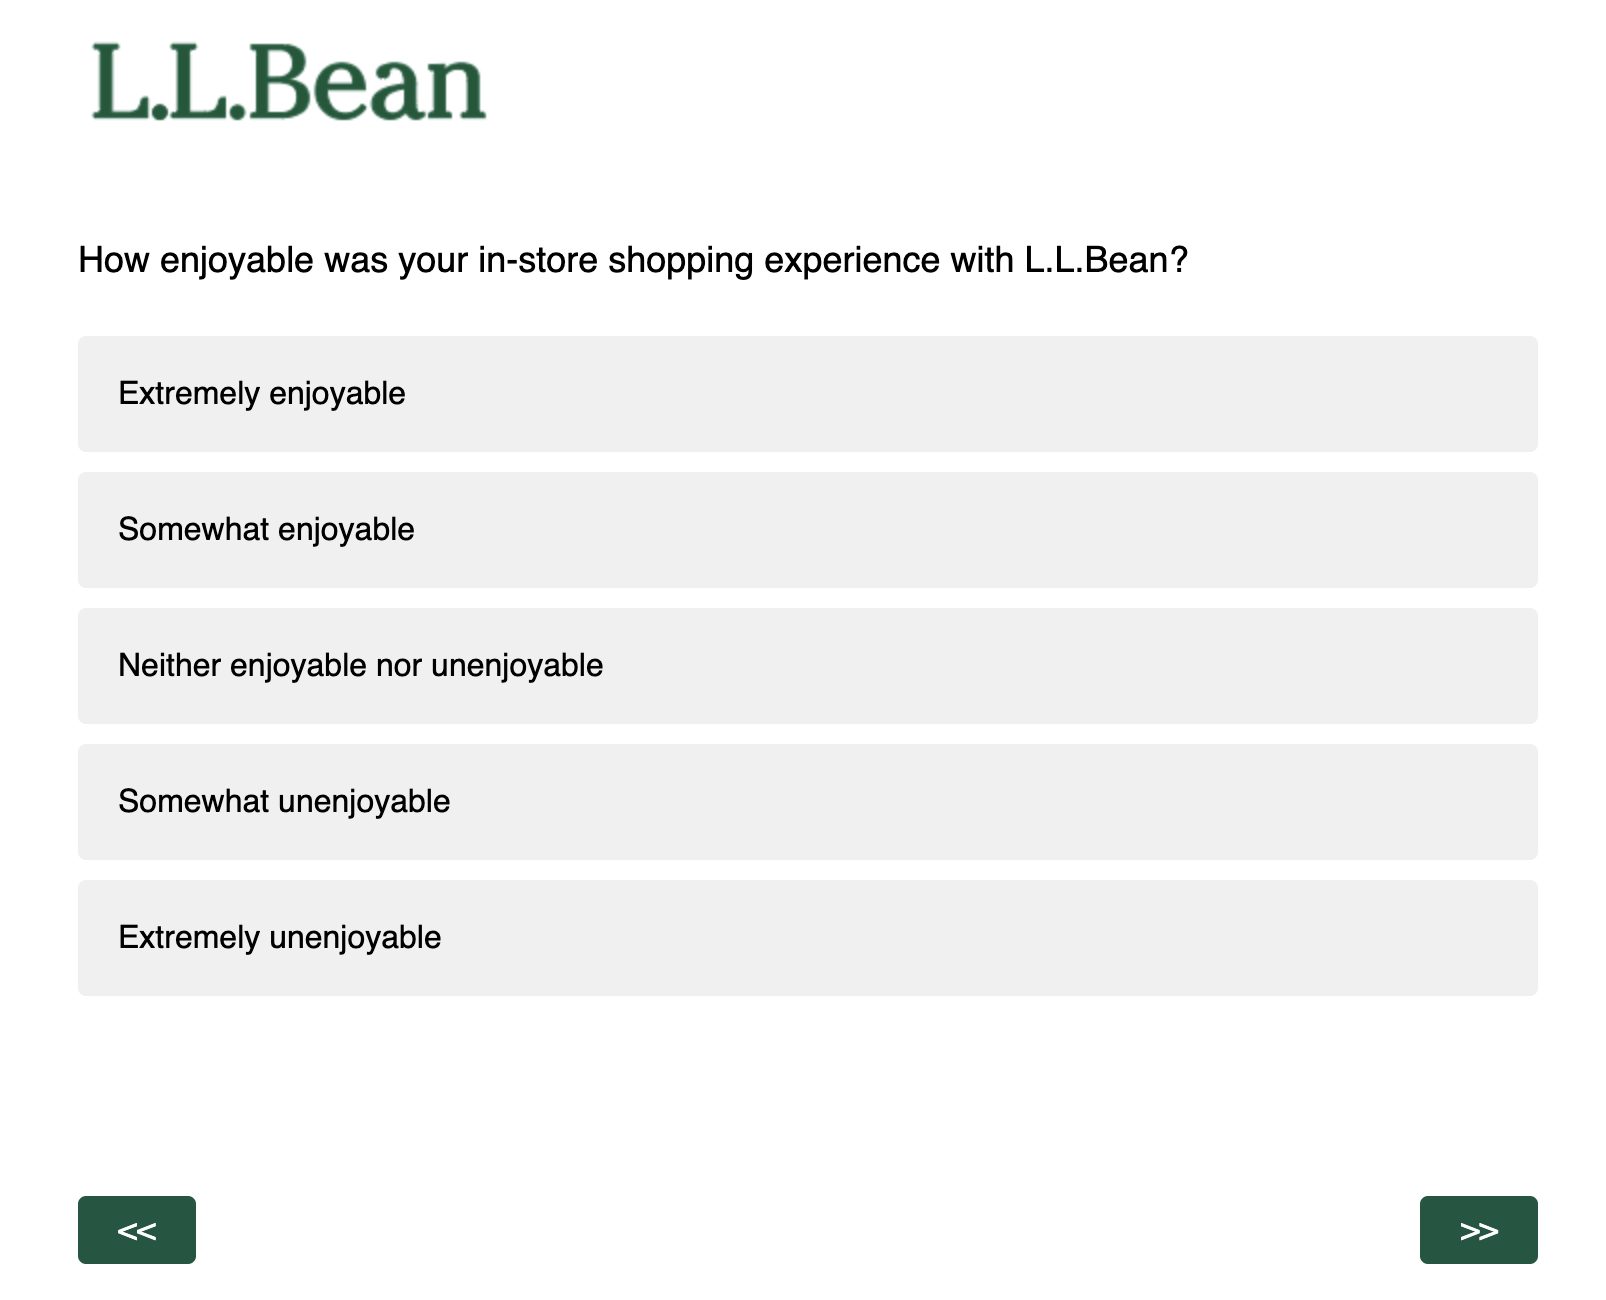 L.L. Bean qualitative customer survey